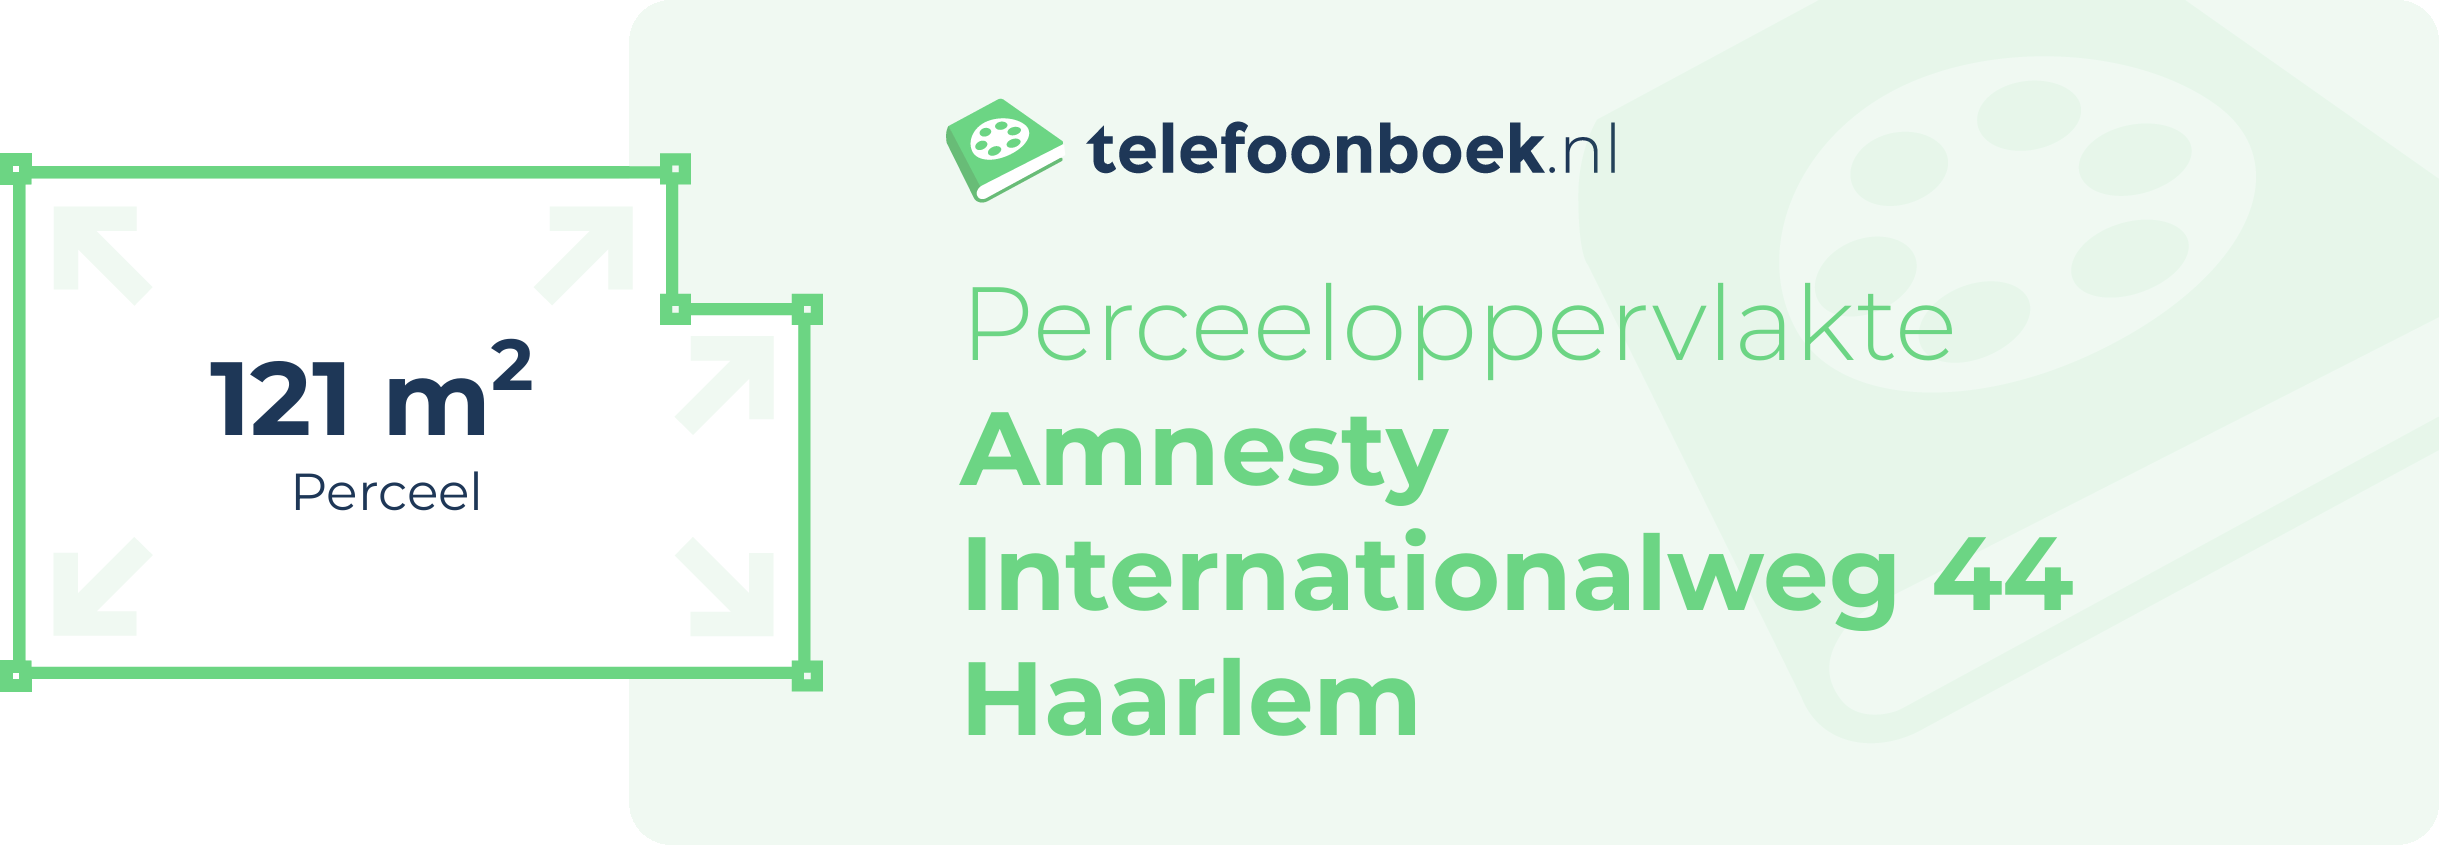 Perceeloppervlakte Amnesty Internationalweg 44 Haarlem